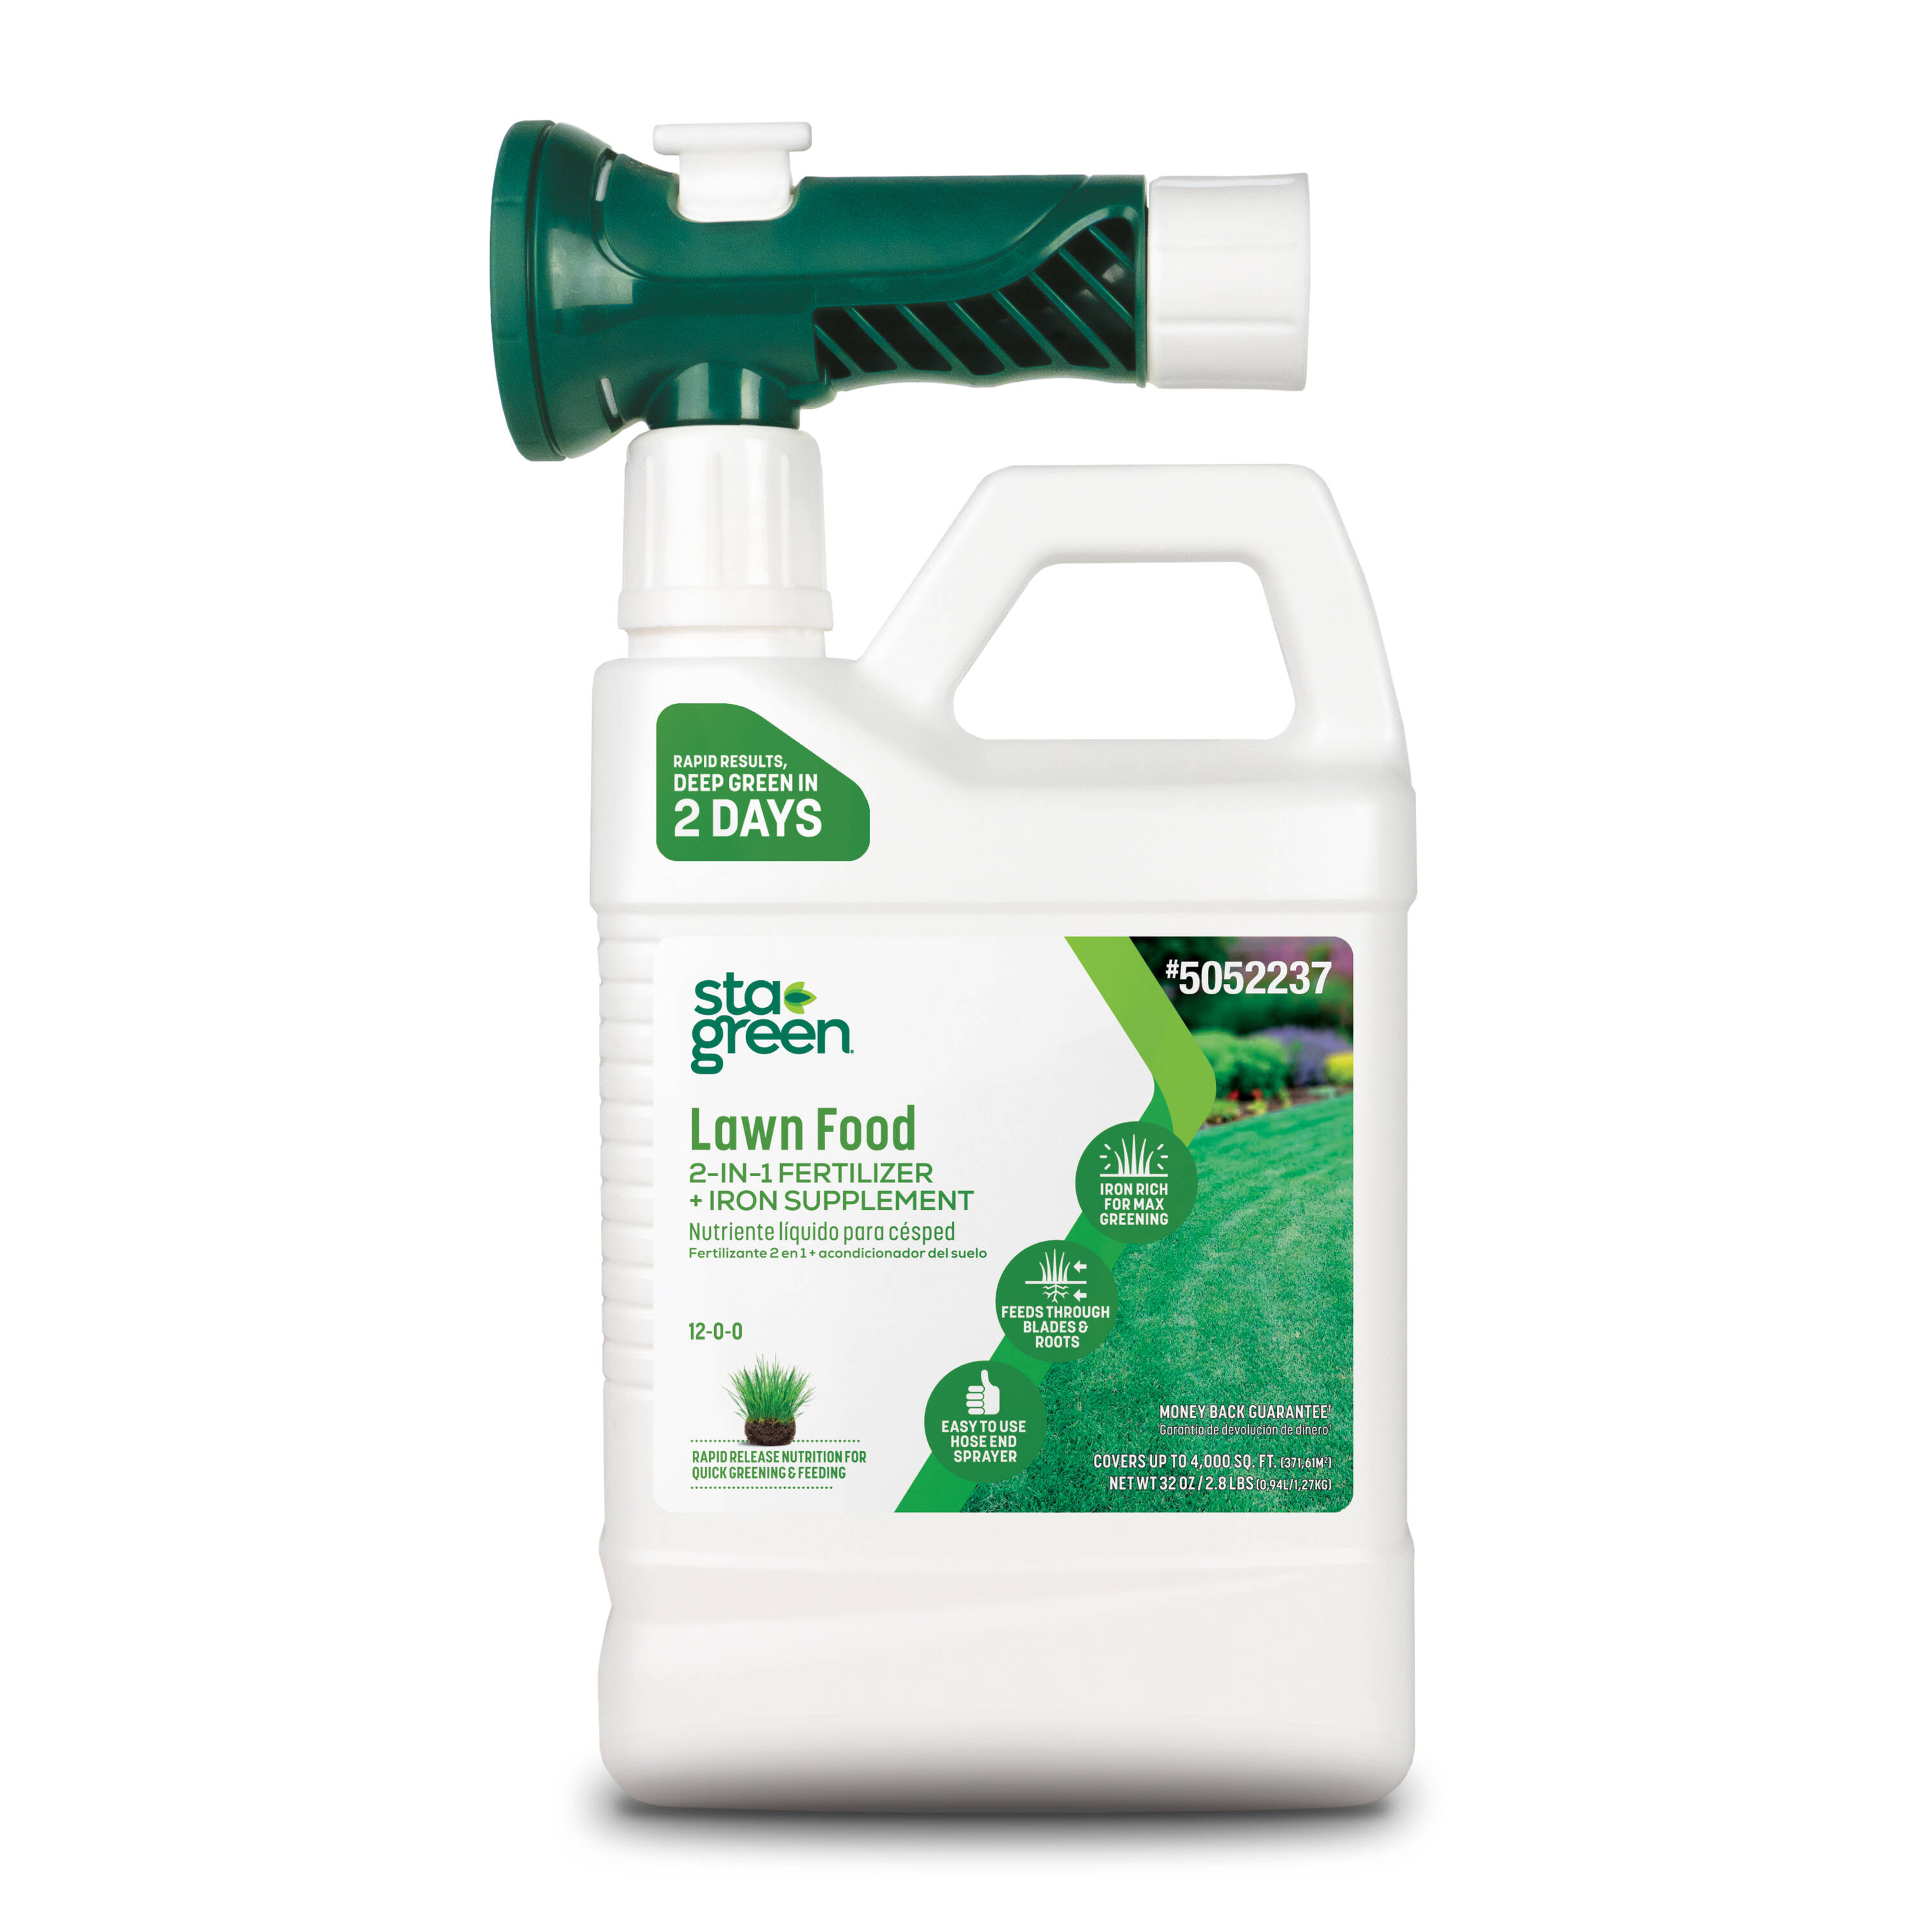 Image of Sta-Green Complete Lawn Food liquid lawn fertilizer